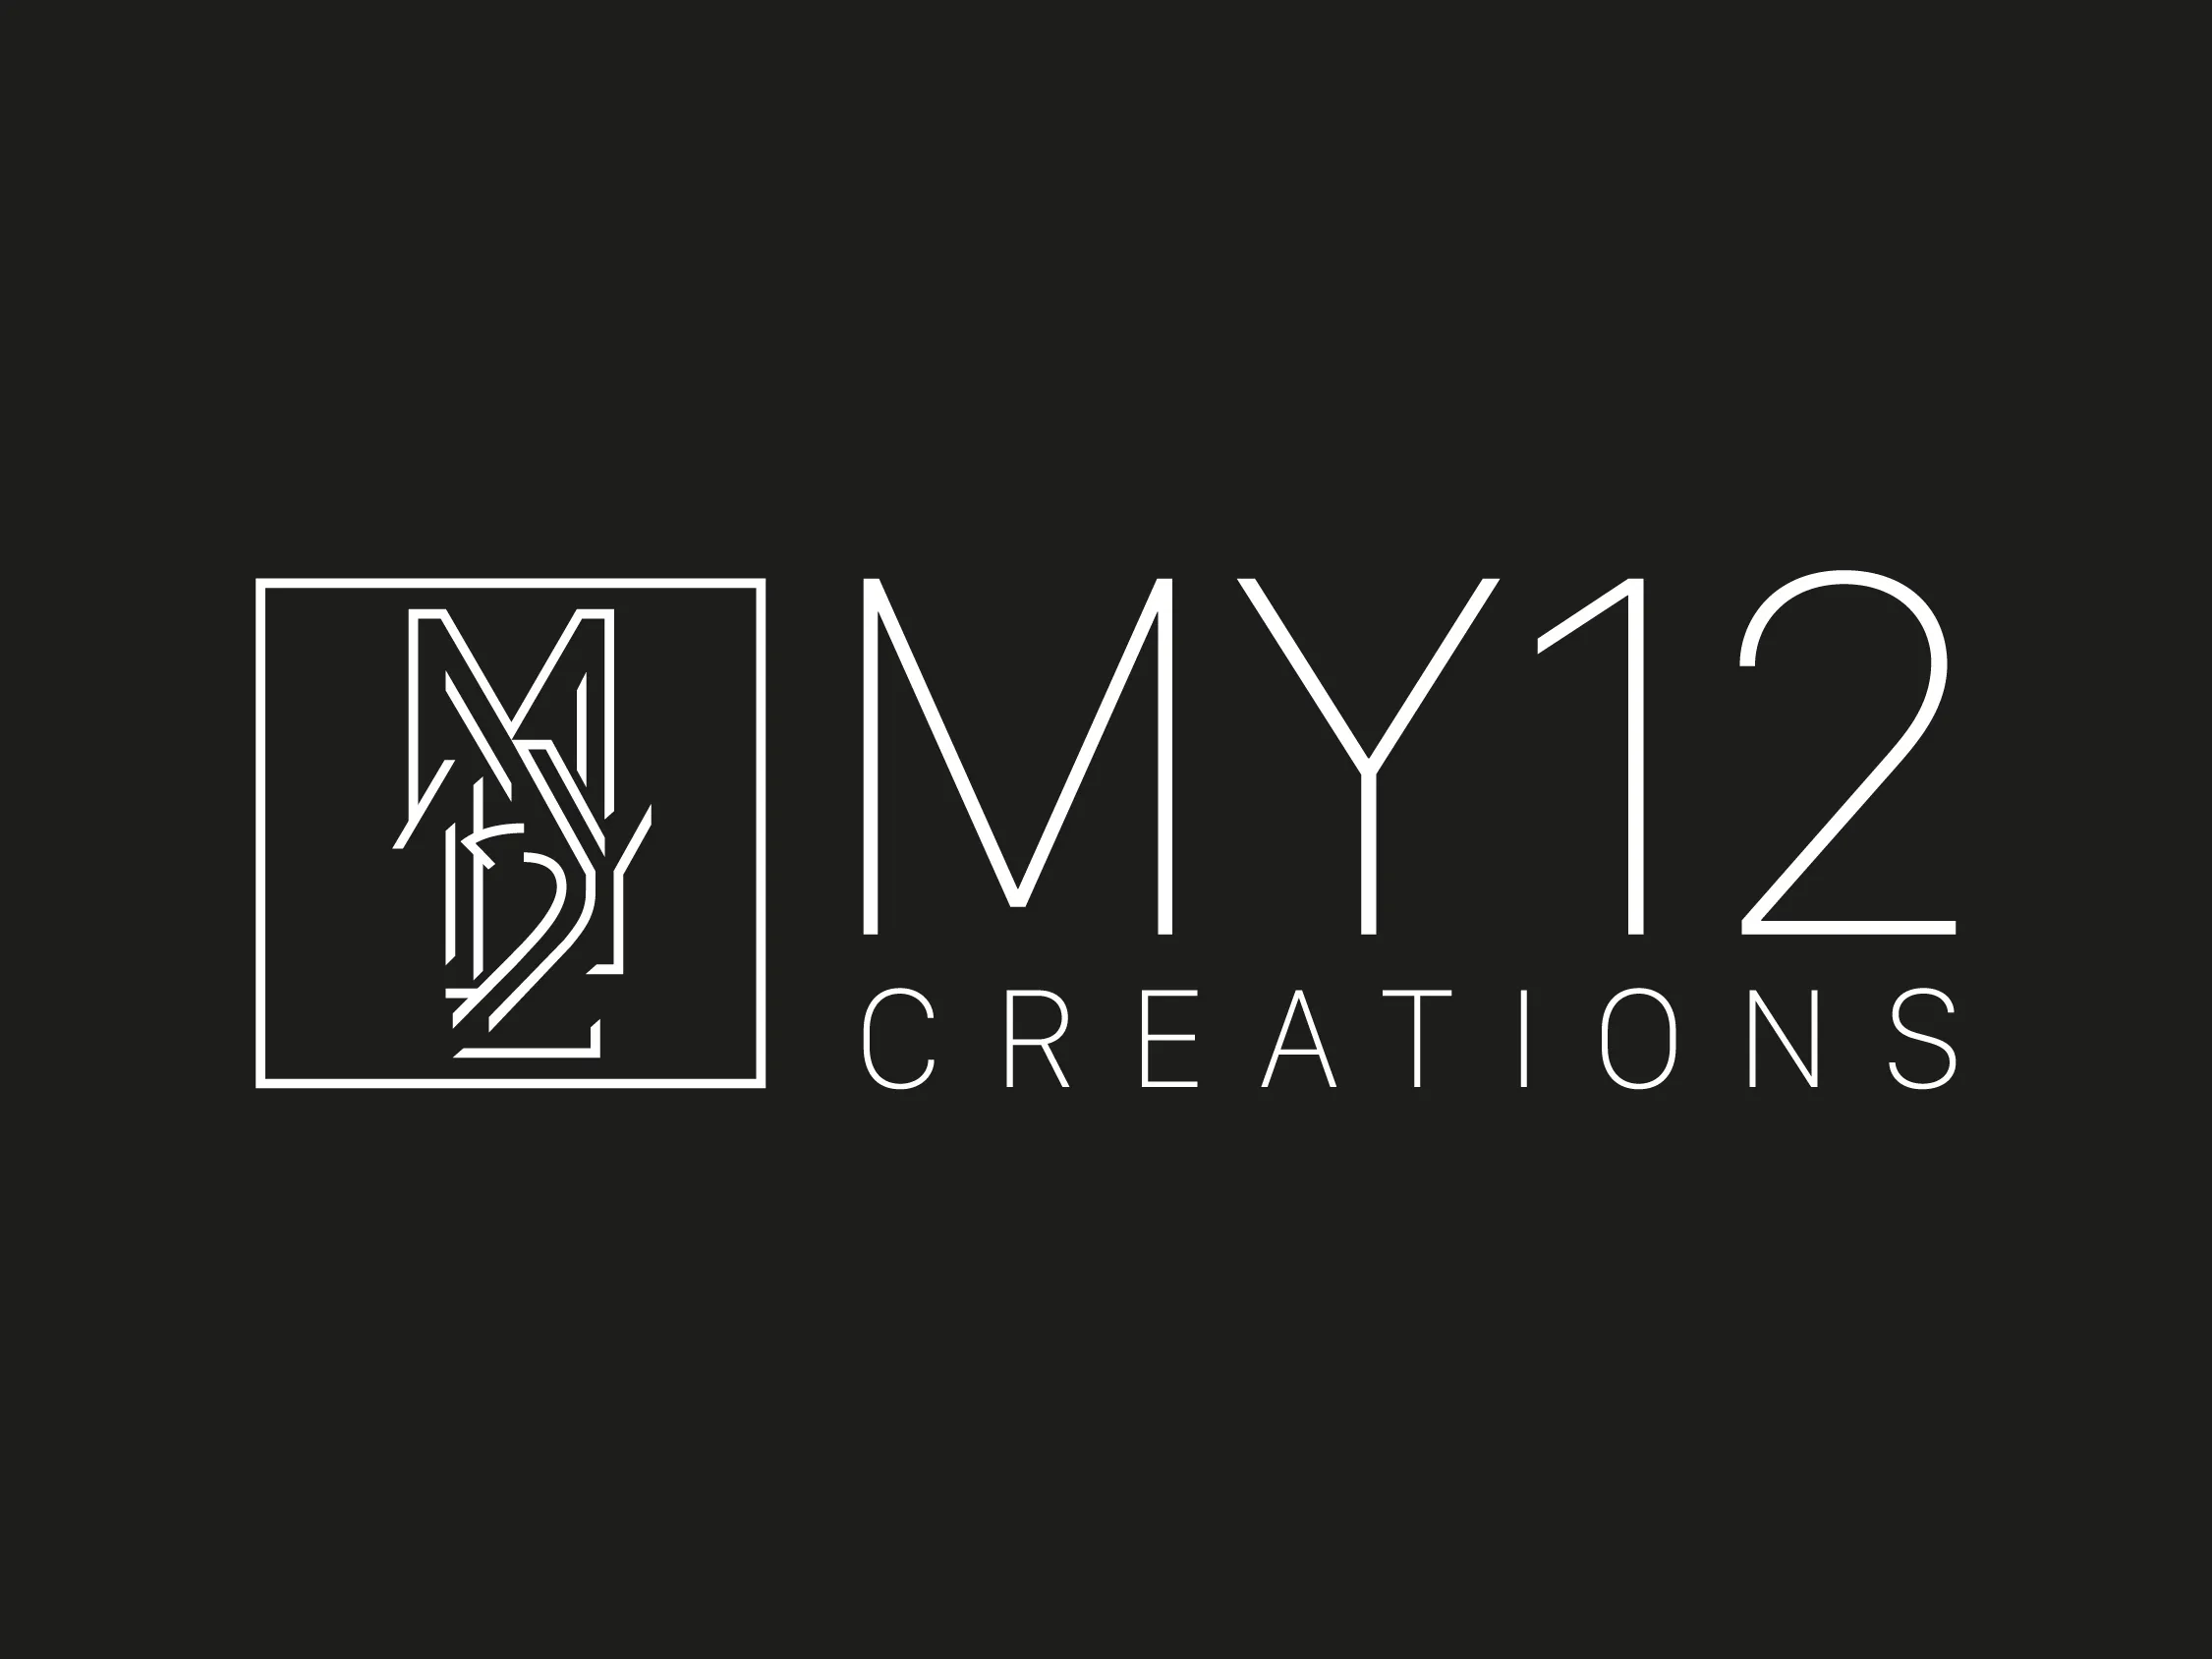 Dazzah Merchants logos-My 12 creations